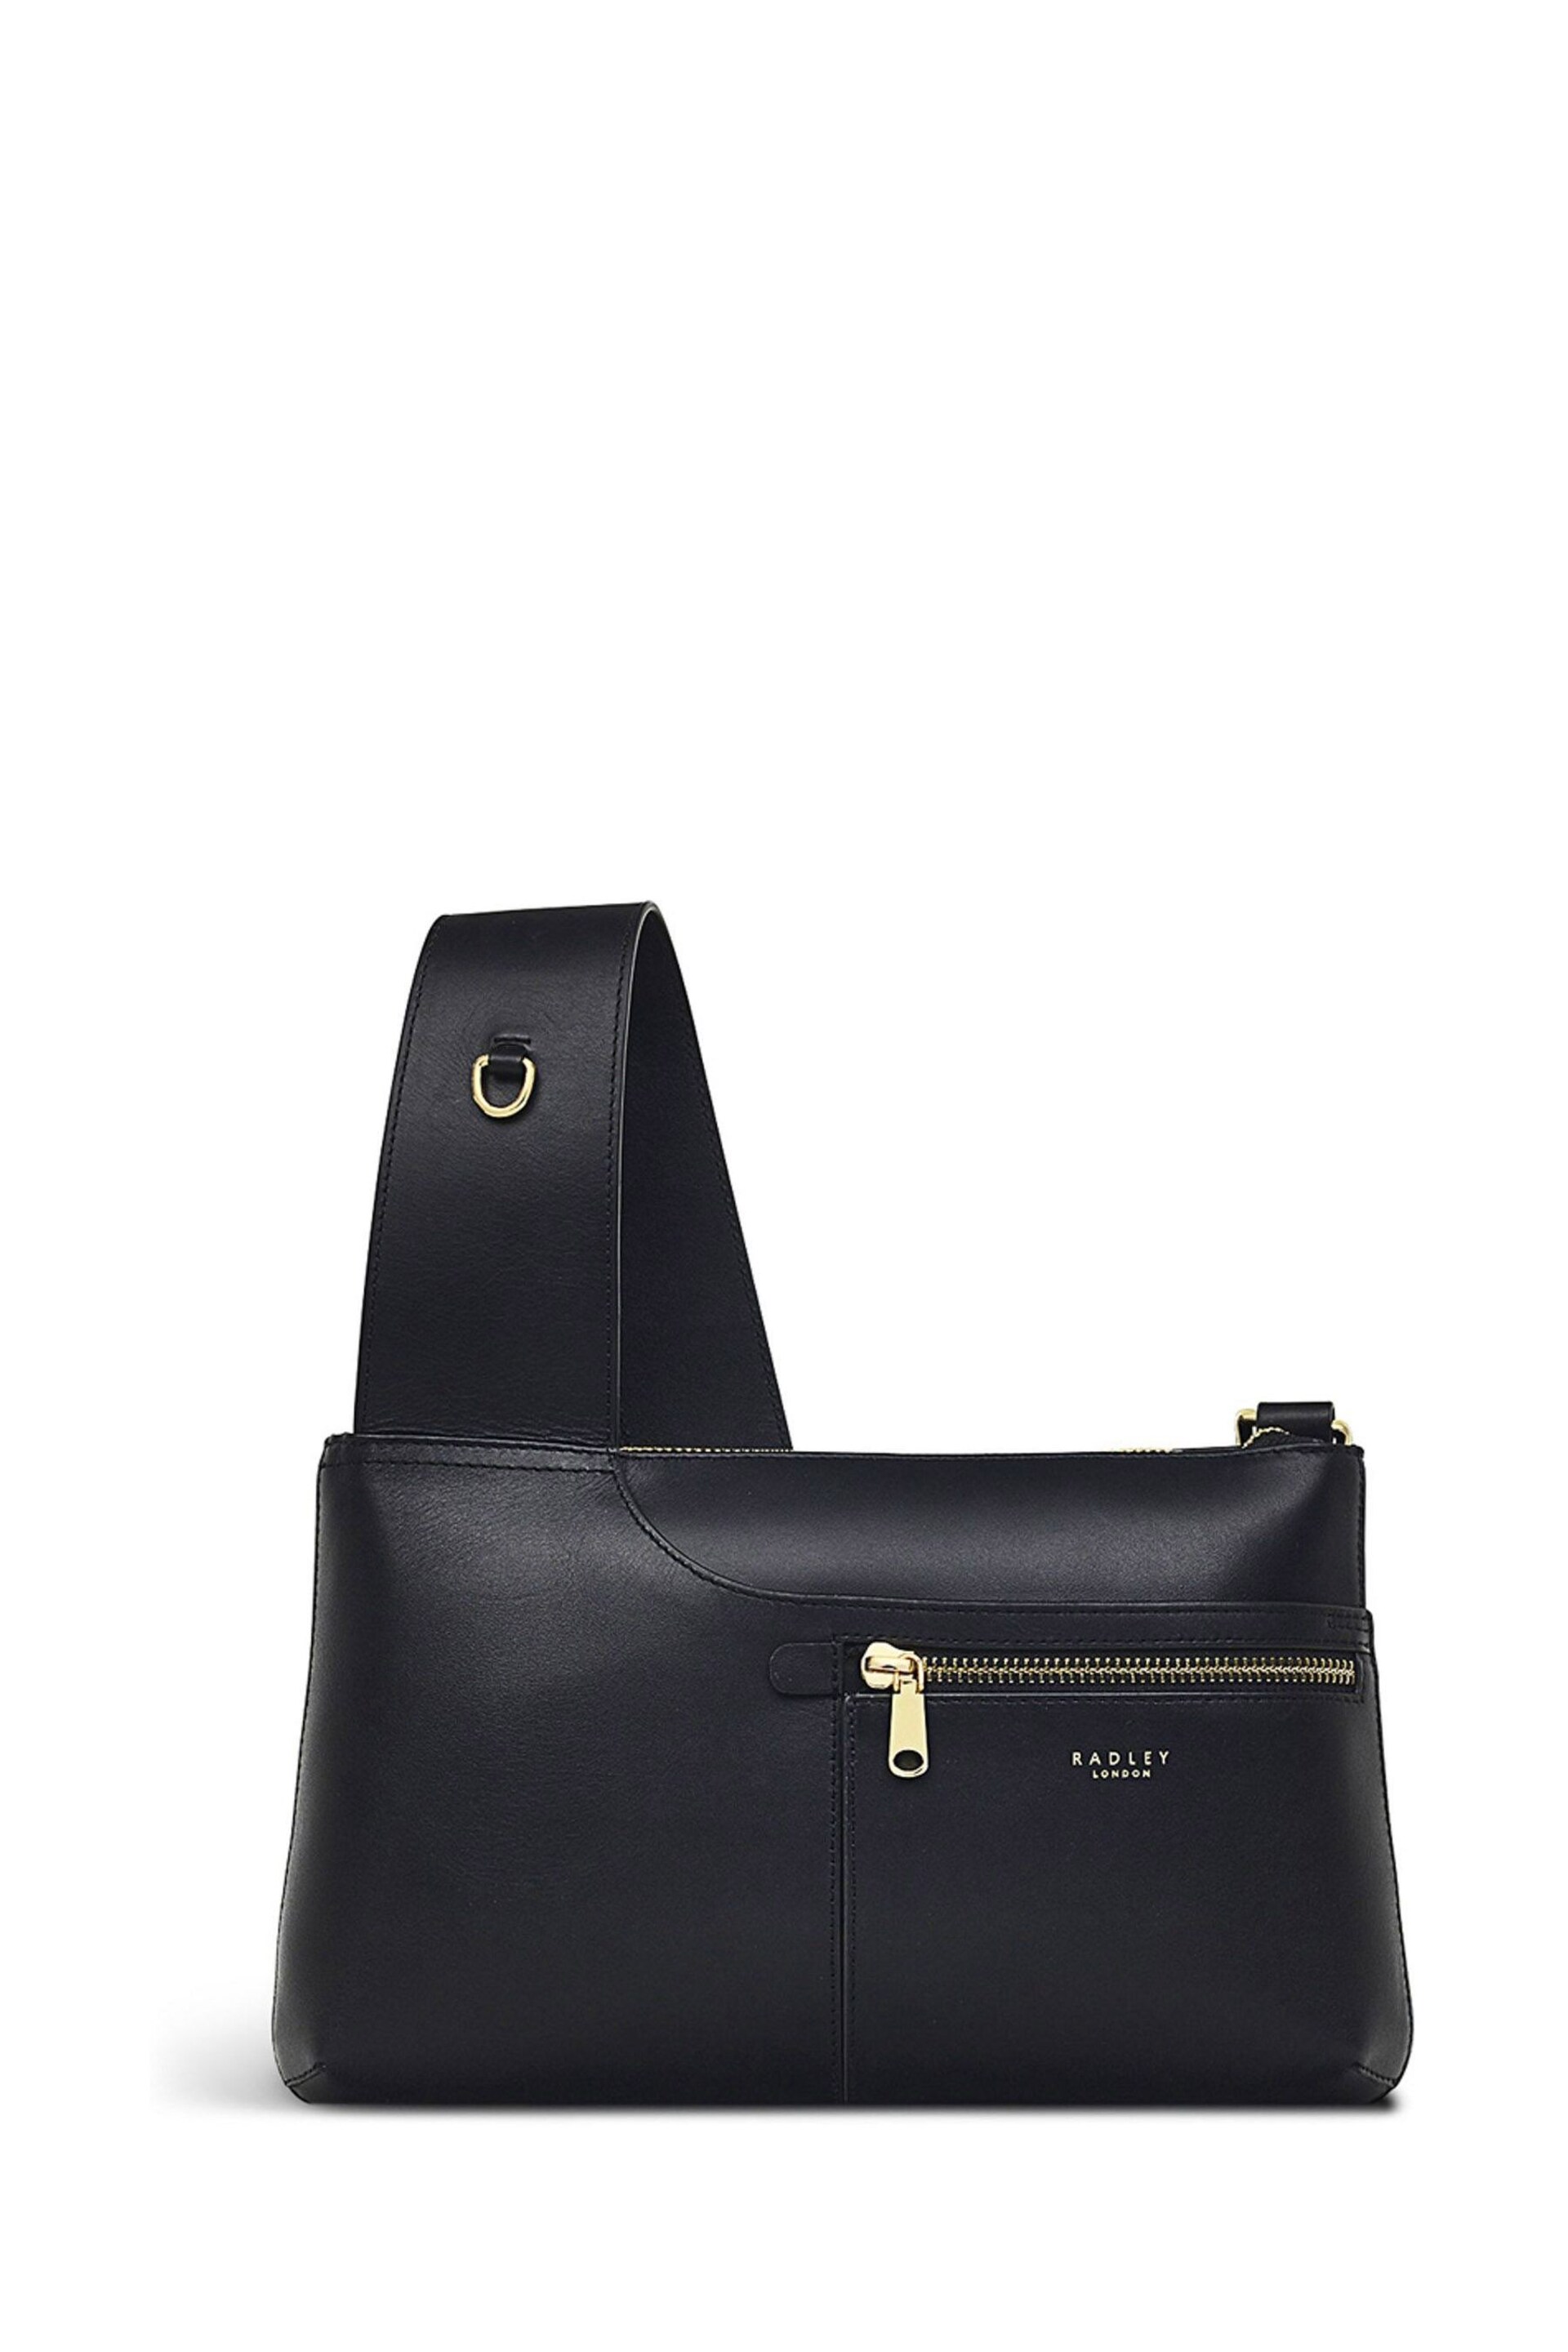 Radley London Small Pockets Icon Zip-Top Cross-Body Black Bag - Image 2 of 5